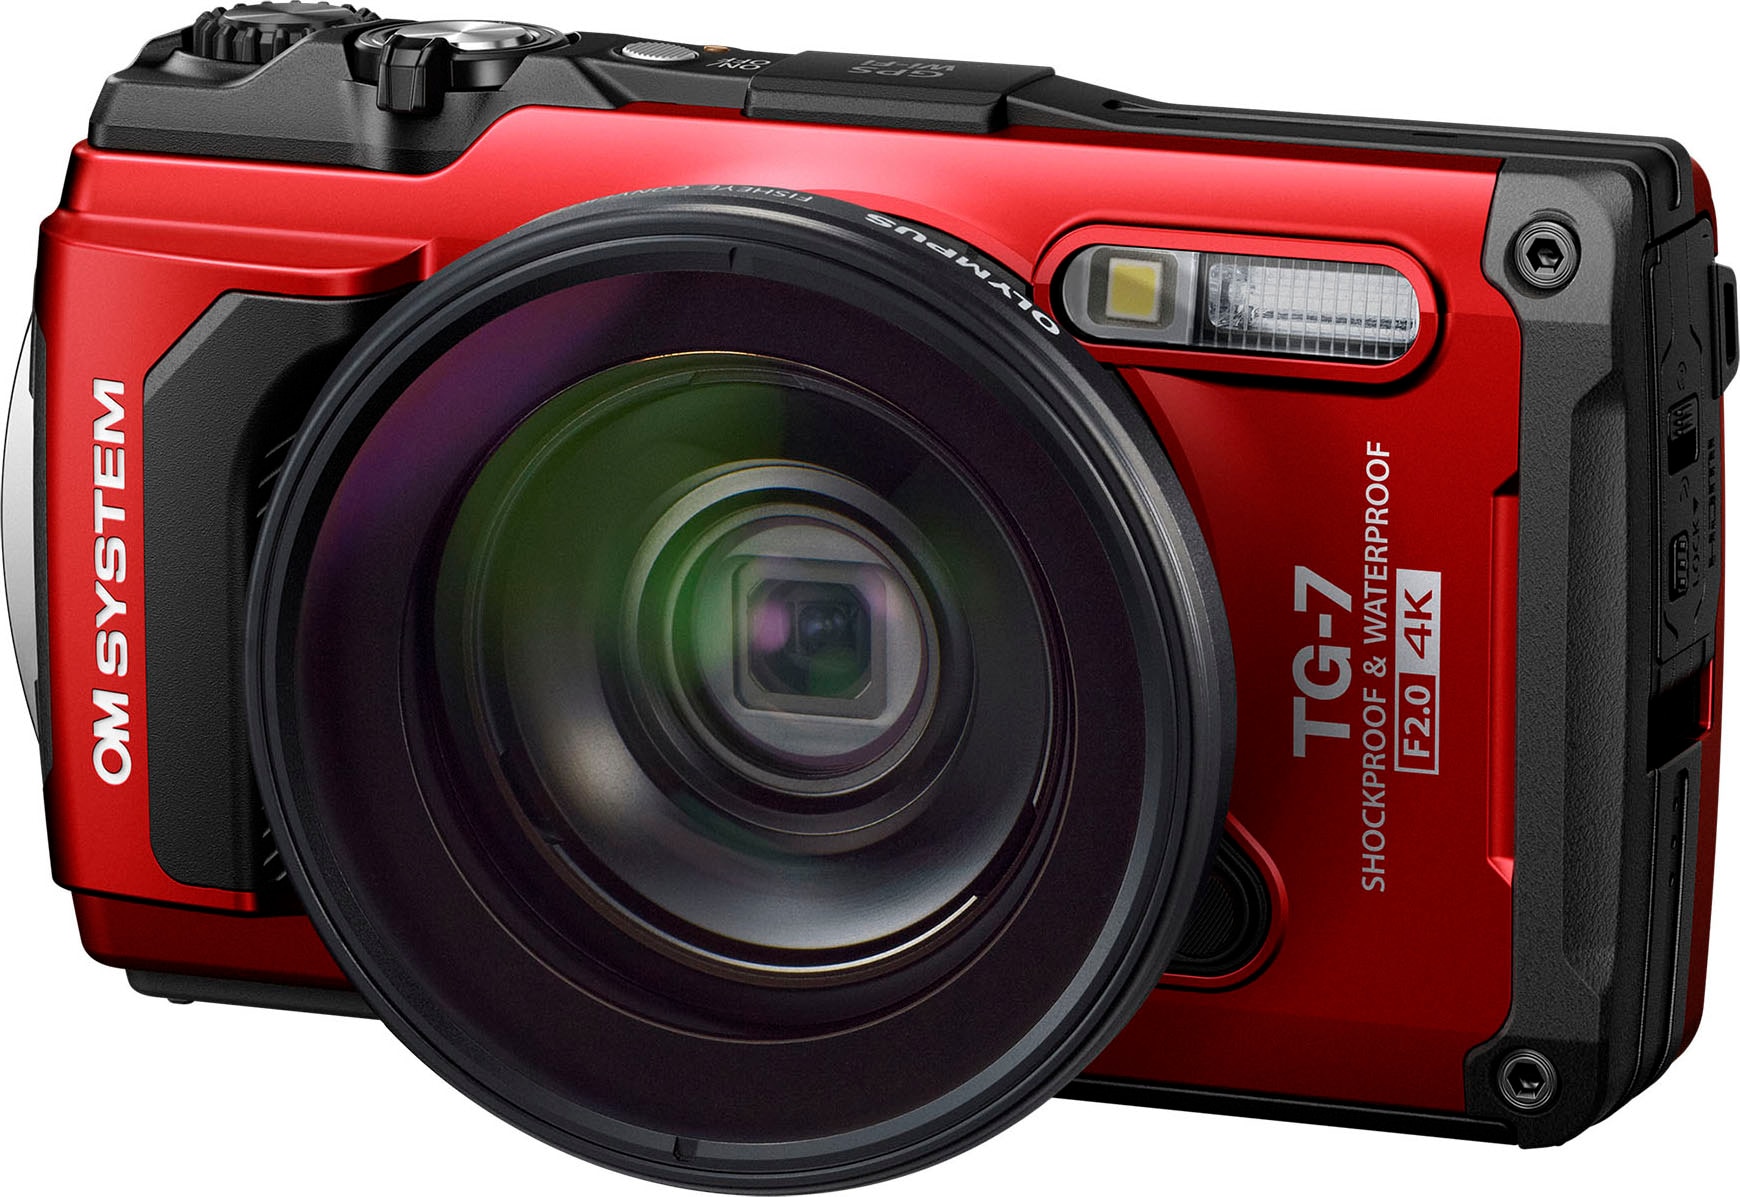 Kompaktkamera »Tough TG-7«, 12 MP, 4 fachx opt. Zoom, Bluetooth-WLAN (Wi-Fi)